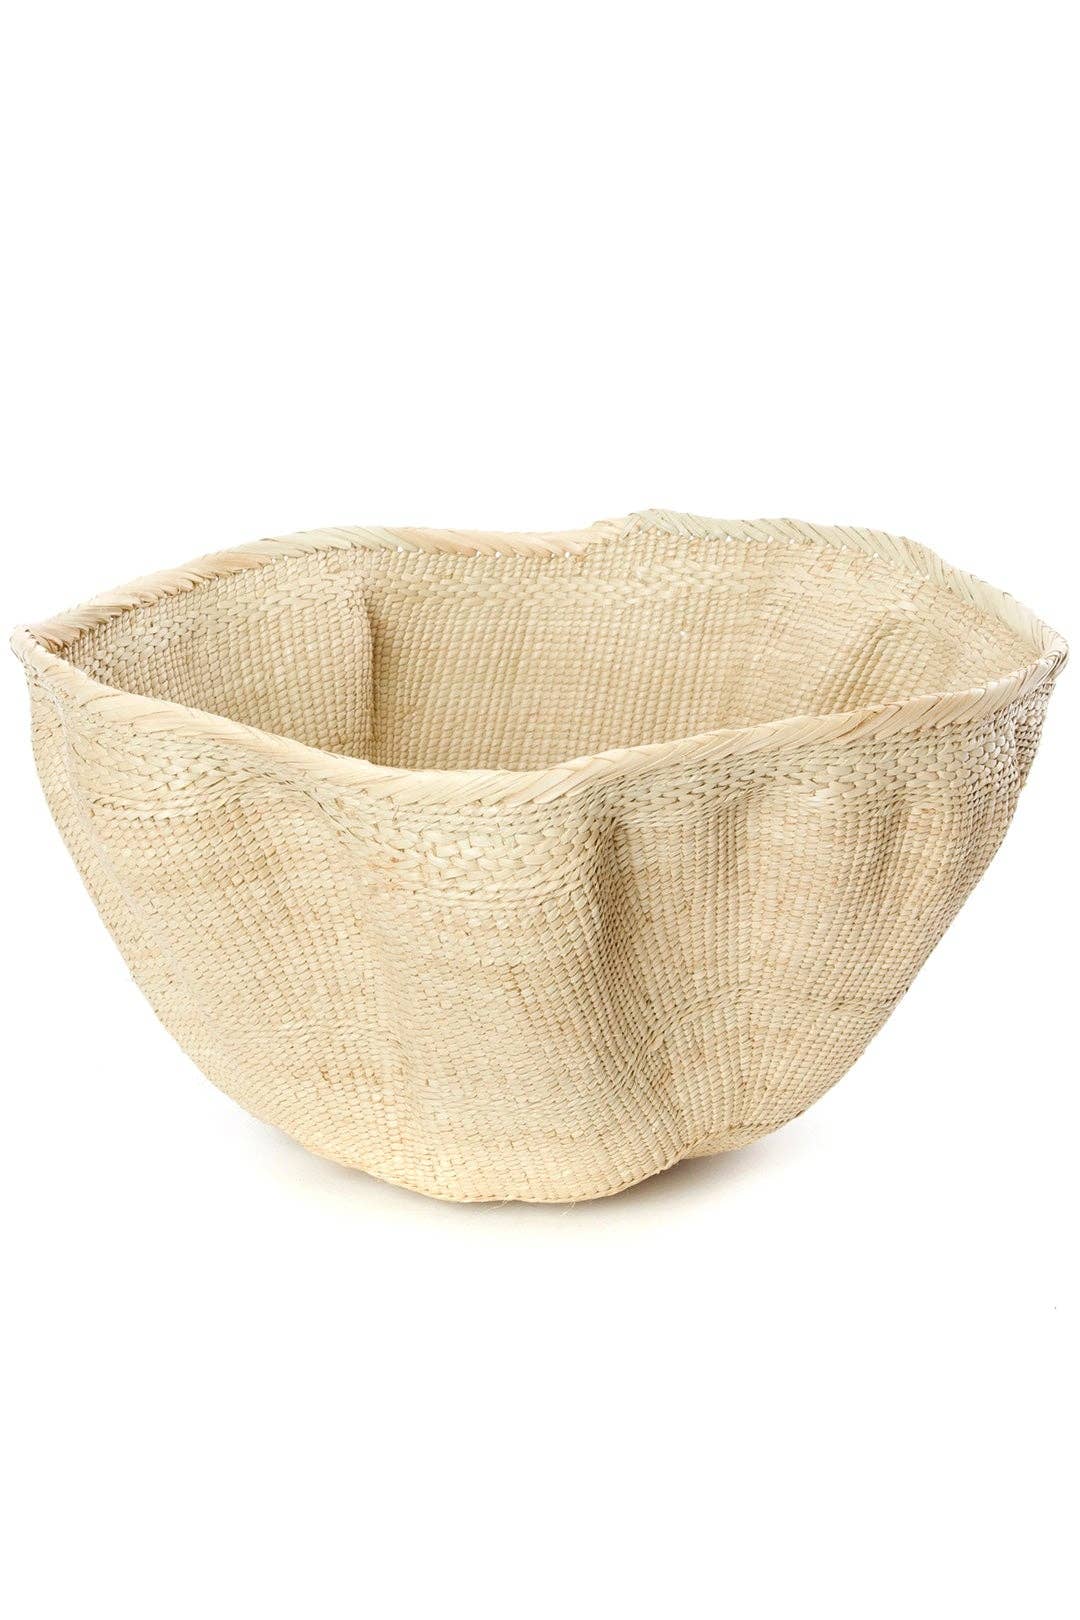 All Natural BaTonga Basket